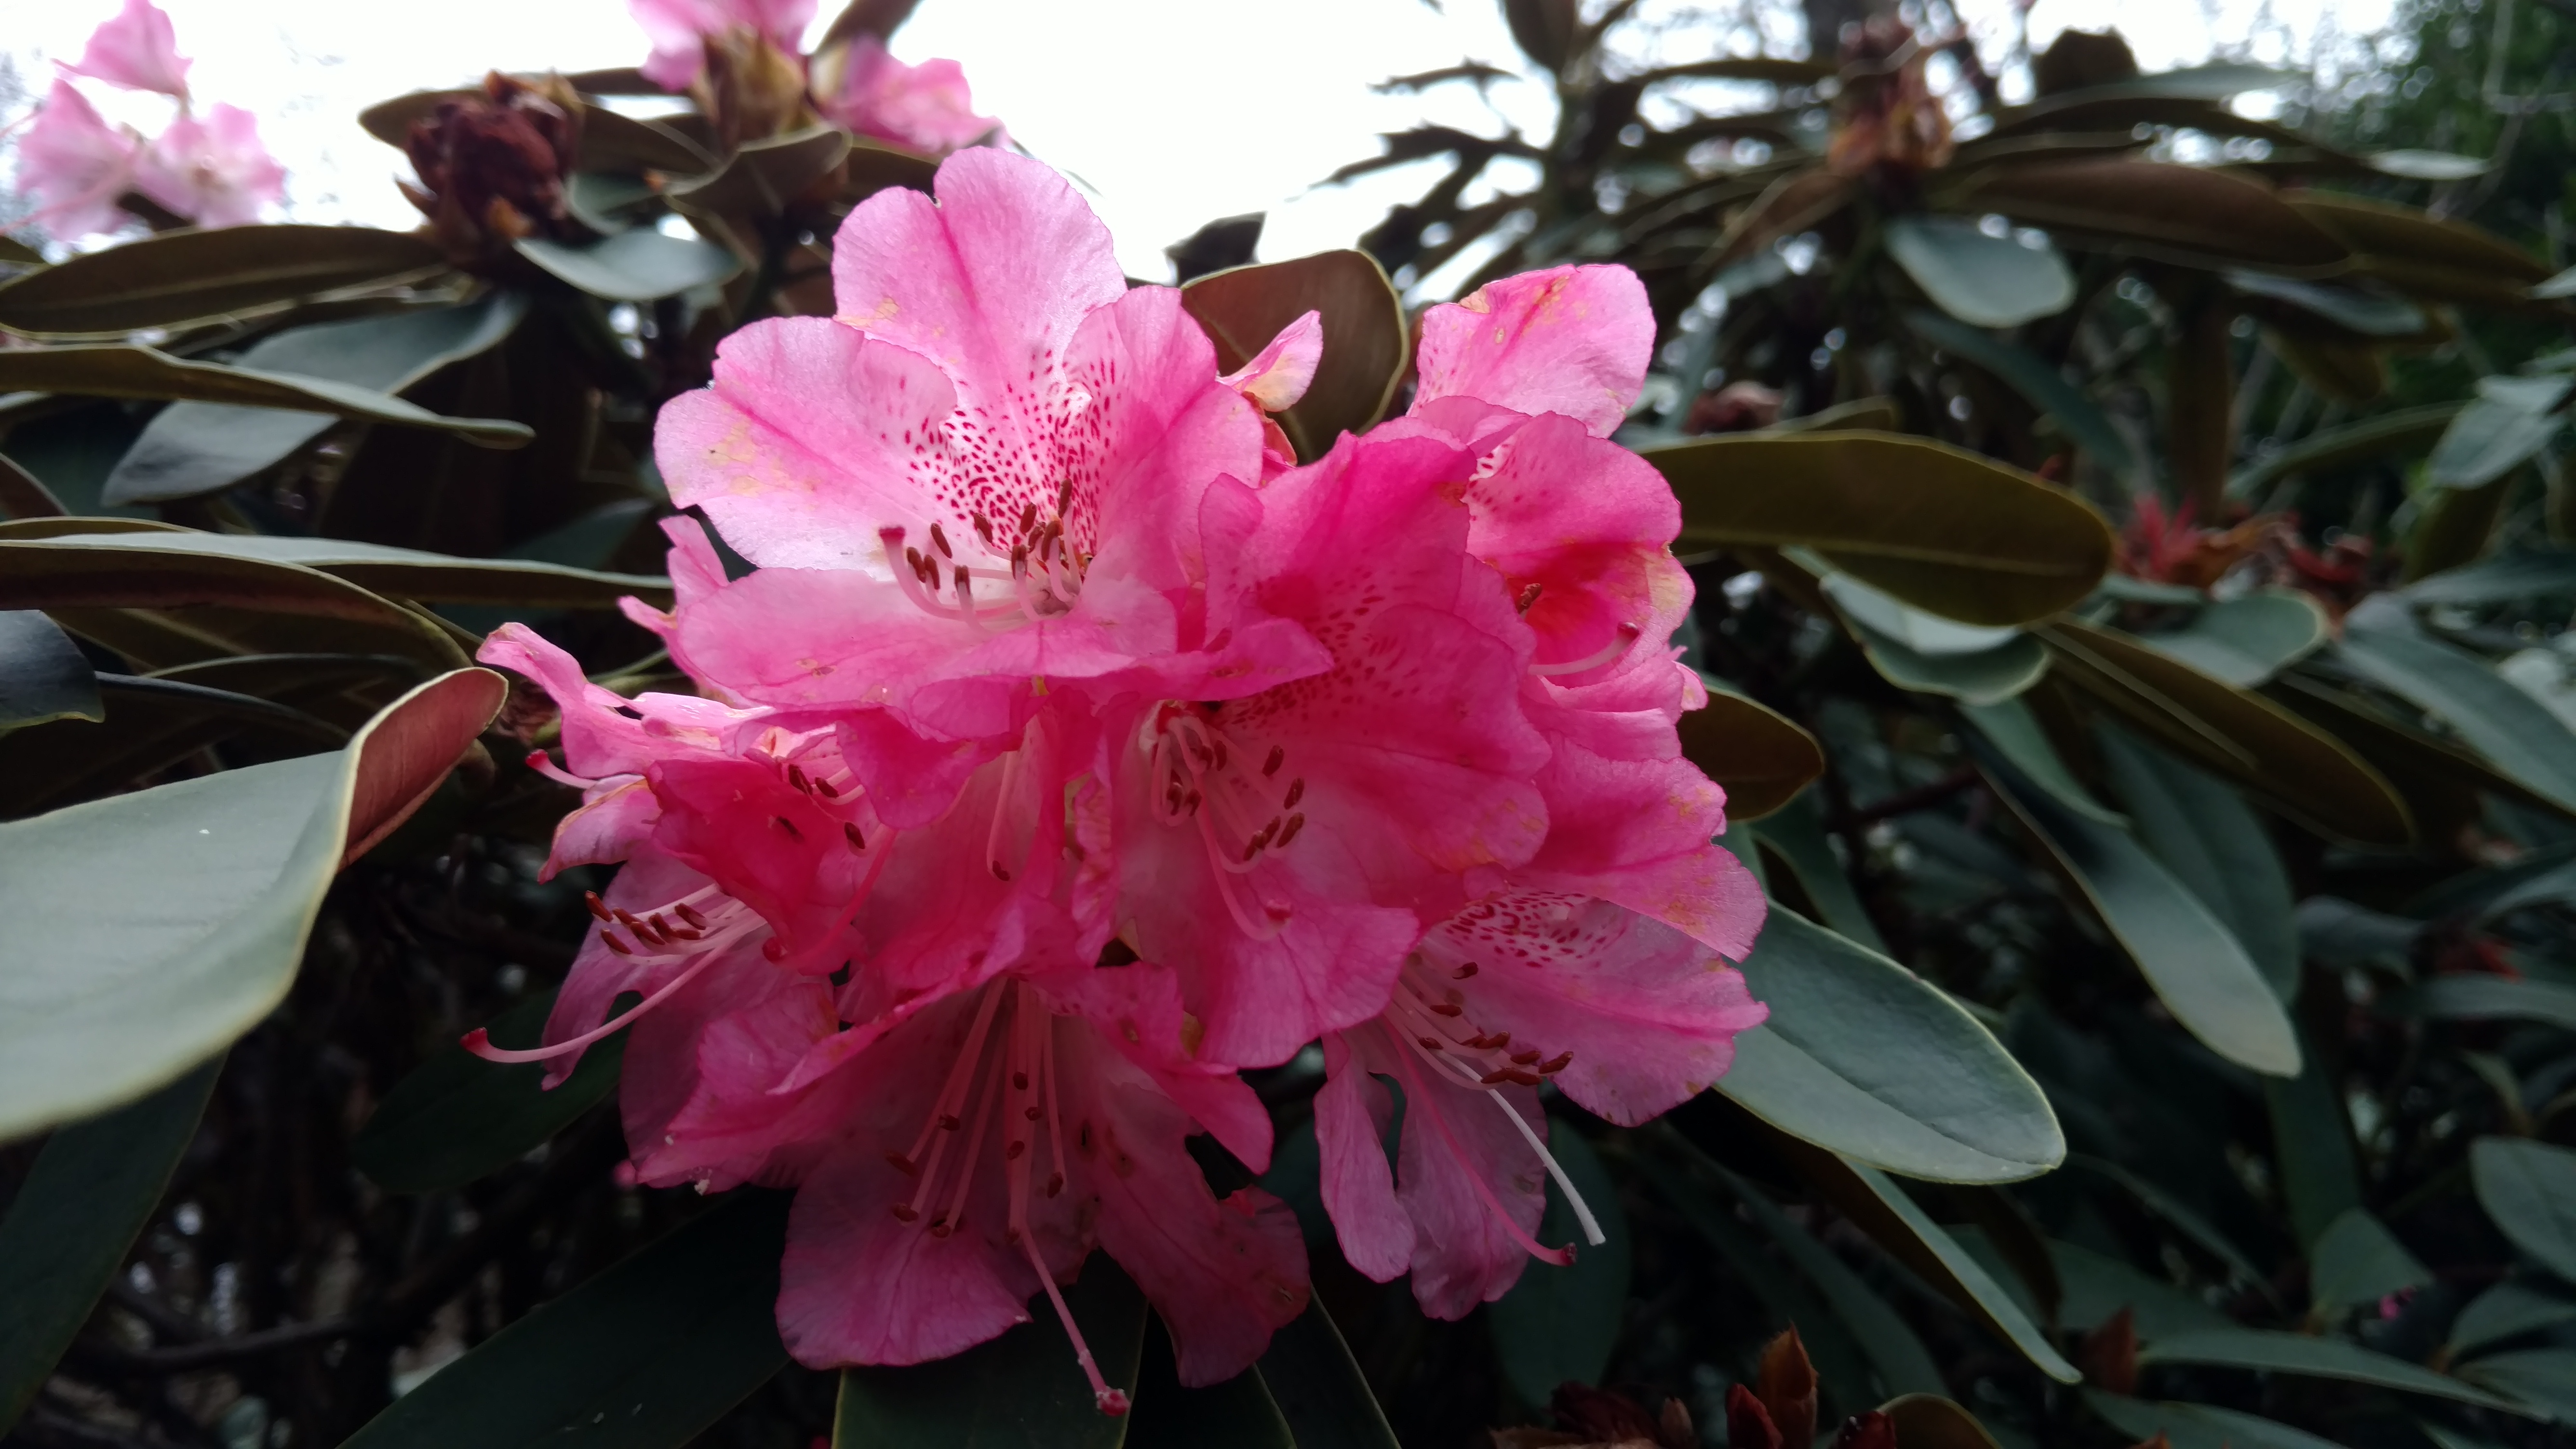 Rhododendron spp plantplacesimage20170304_163405.jpg